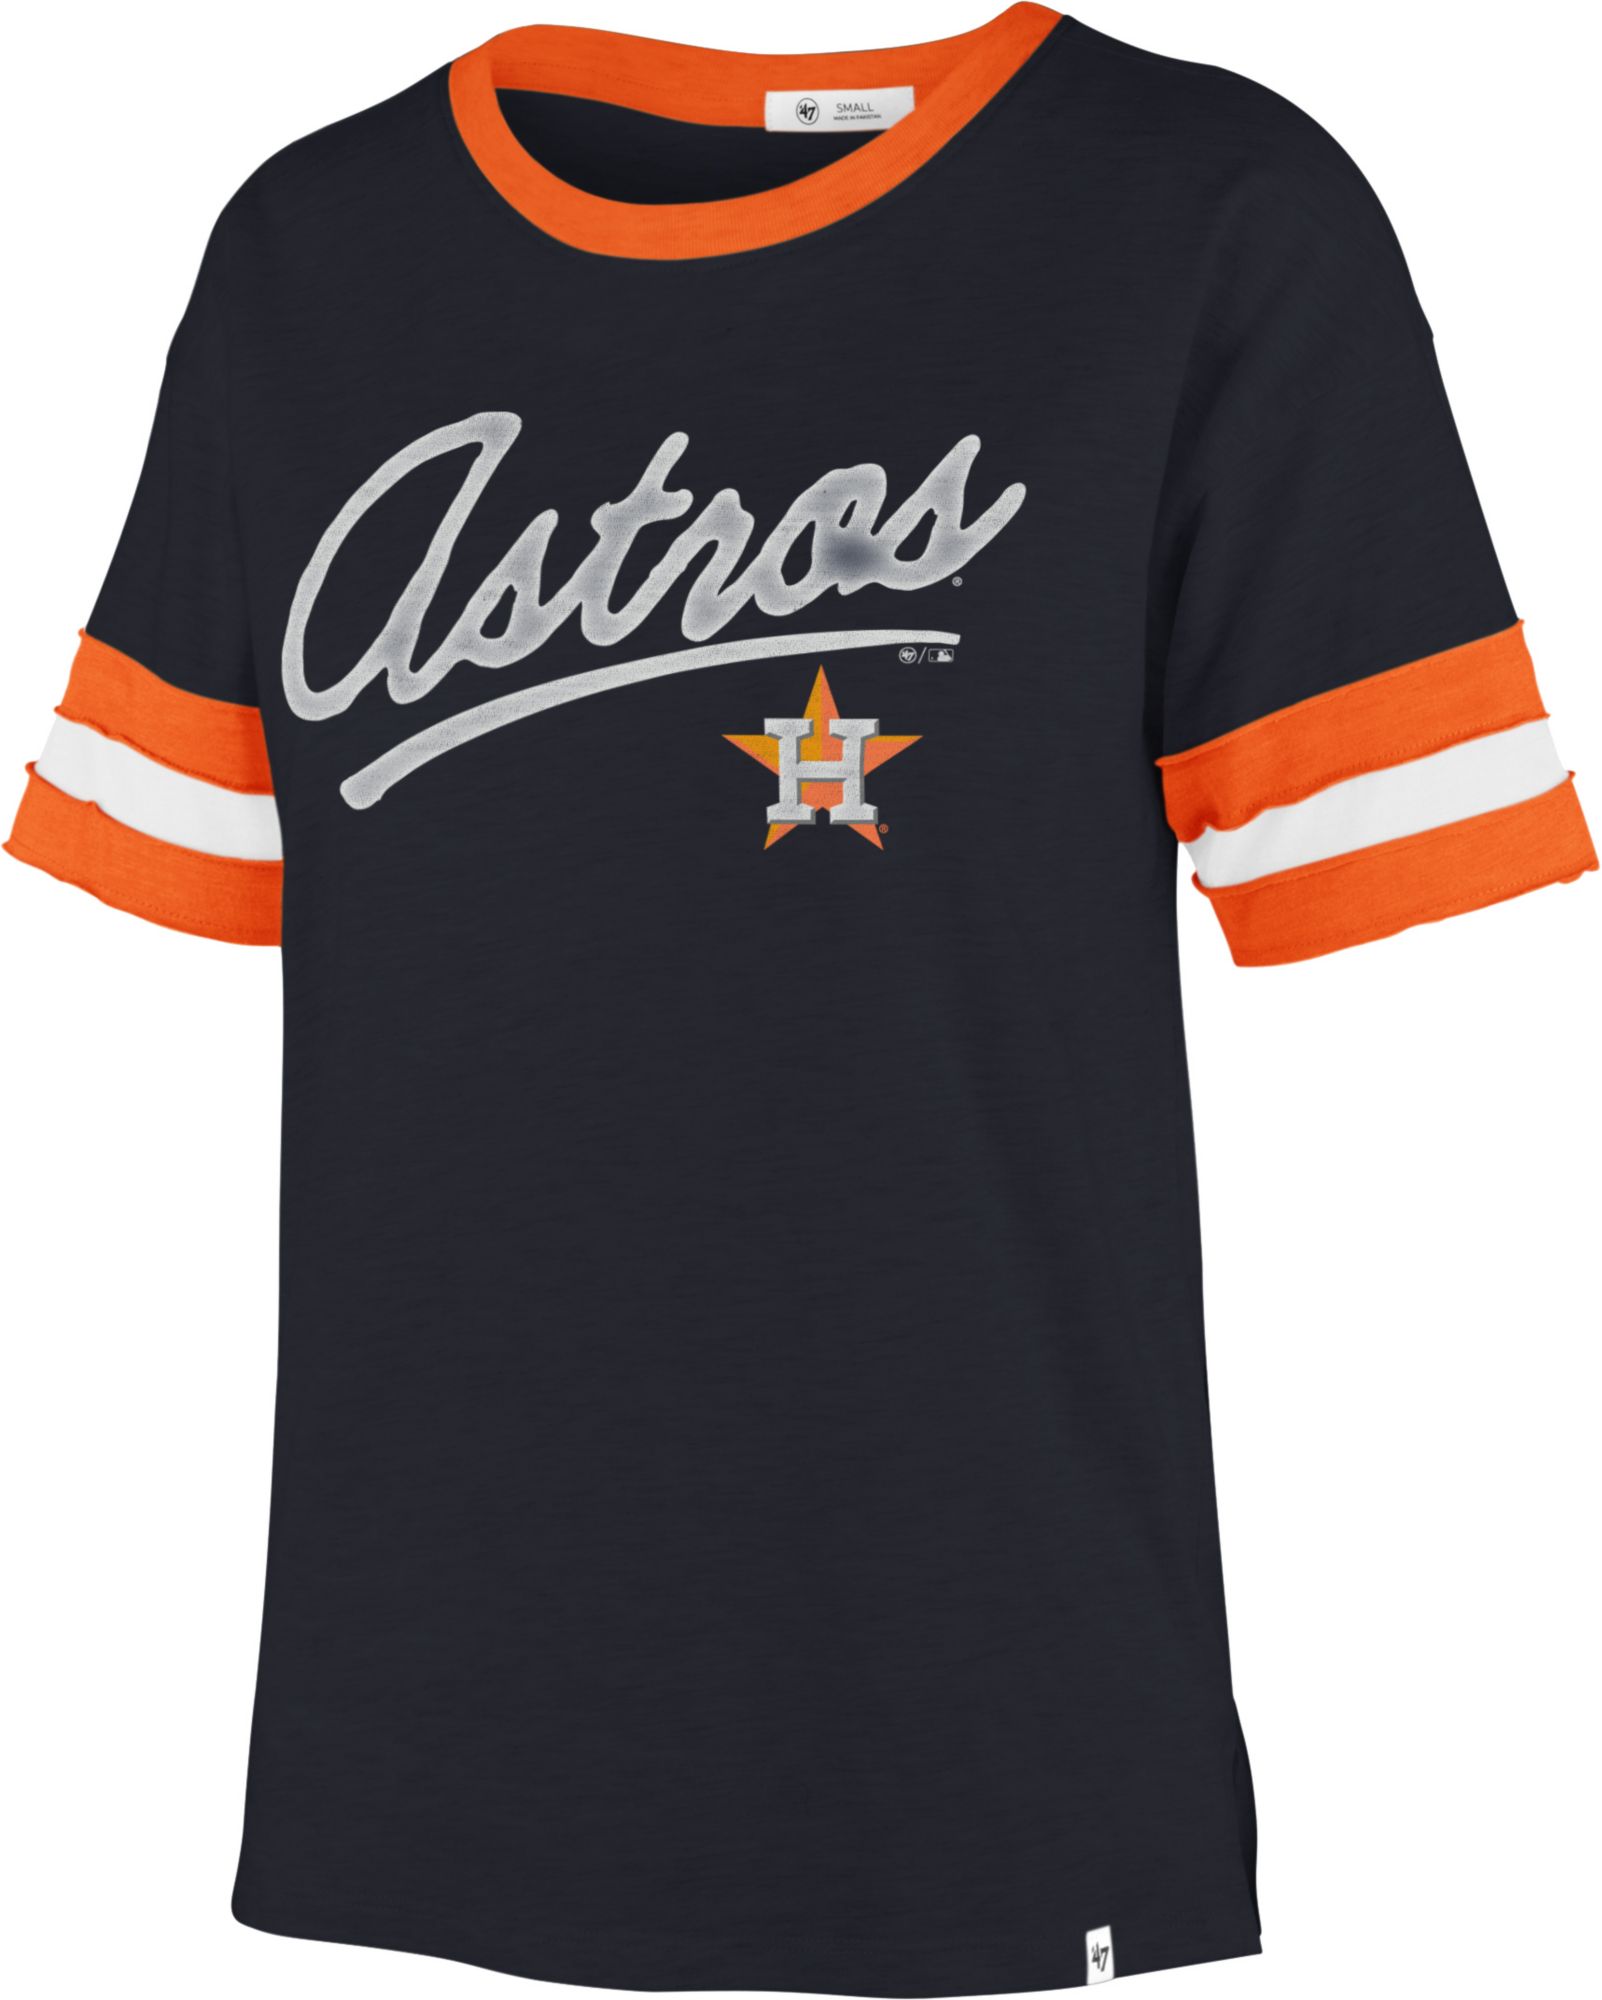 47 Atlanta Braves Premier Franklin Short Sleeve T-shirt